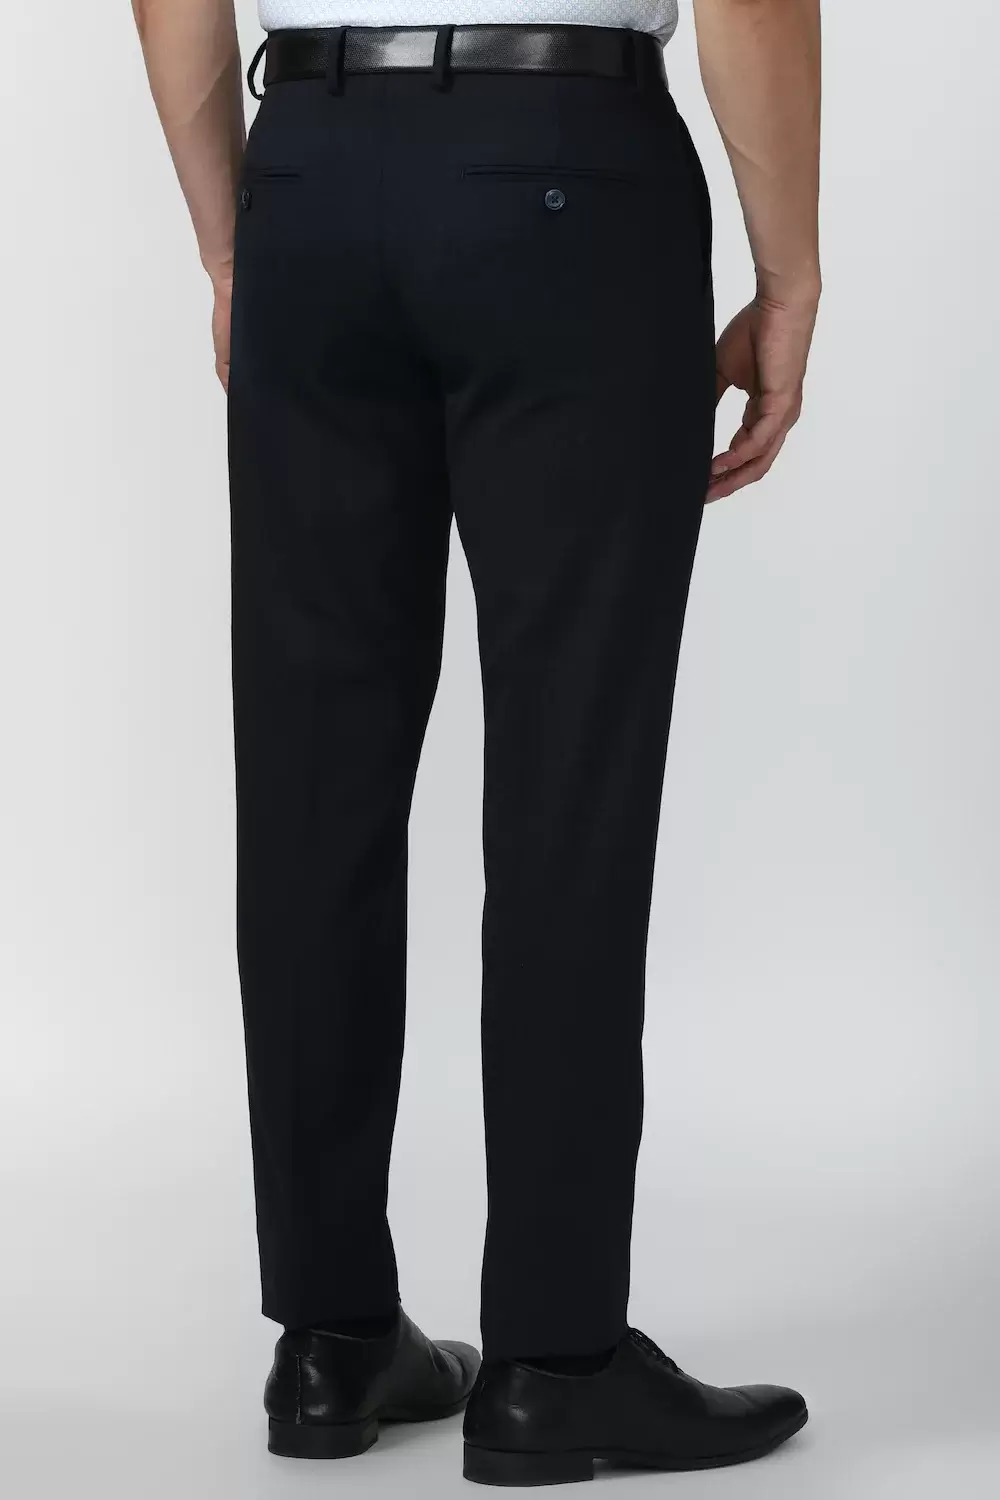 PETER ENGLAND Slim Fit Men Blue, Grey Trousers - Buy PETER ENGLAND Slim Fit  Men Blue, Grey Trousers Online at Best Prices in India | Flipkart.com